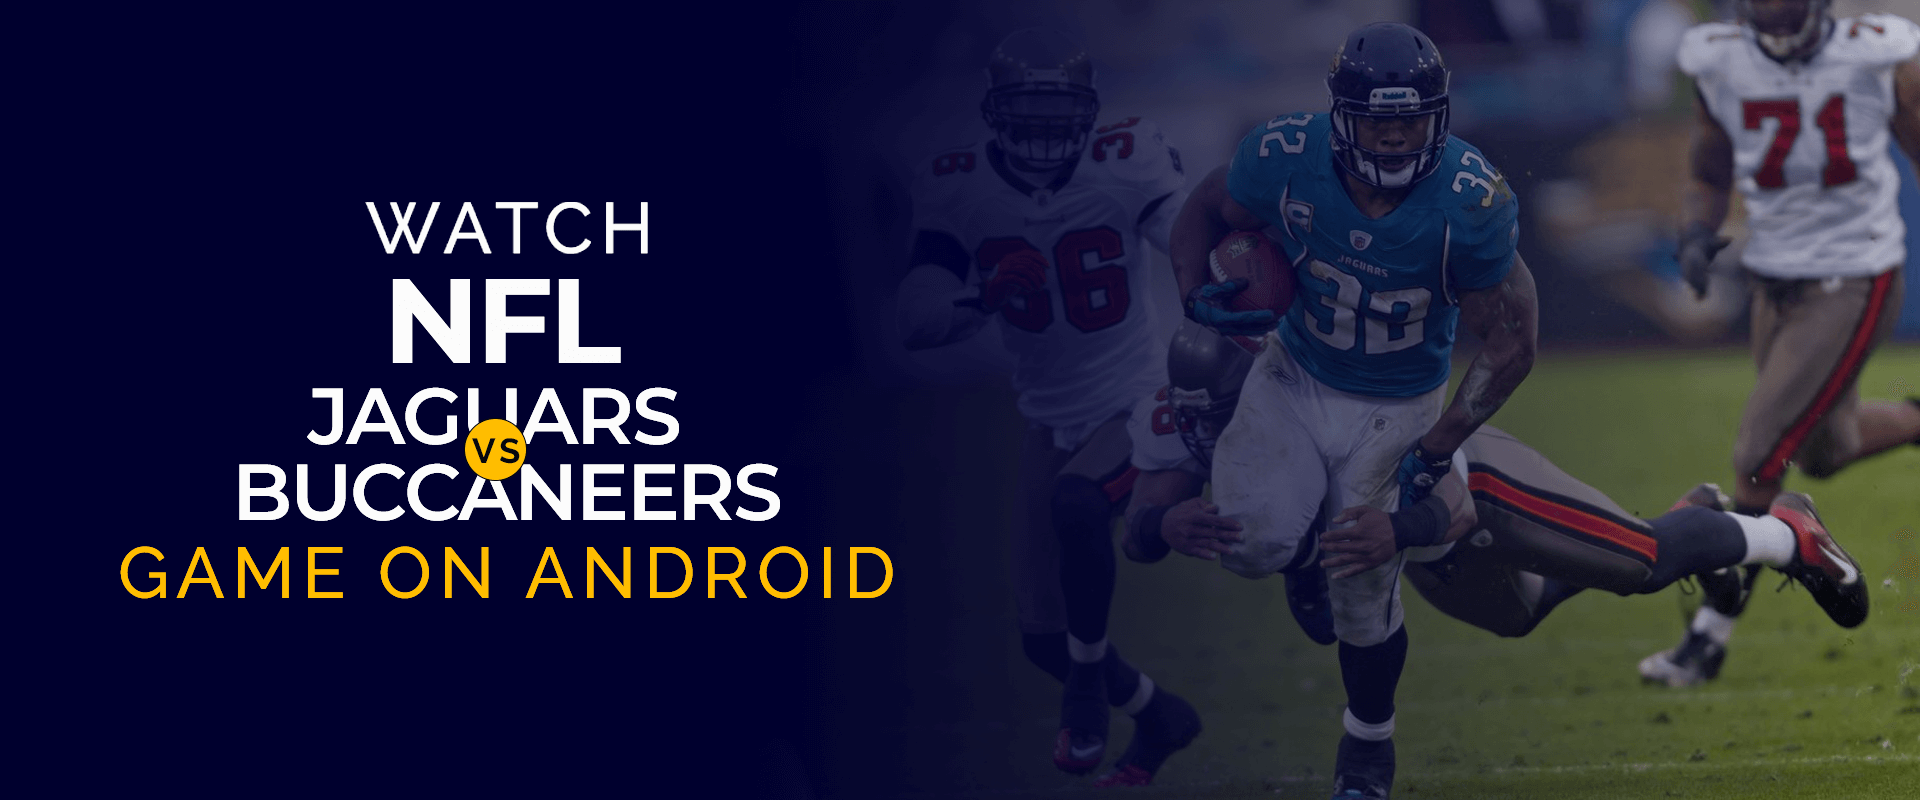 Смотрите игру NFL Jaguars против Buccaneers на Android